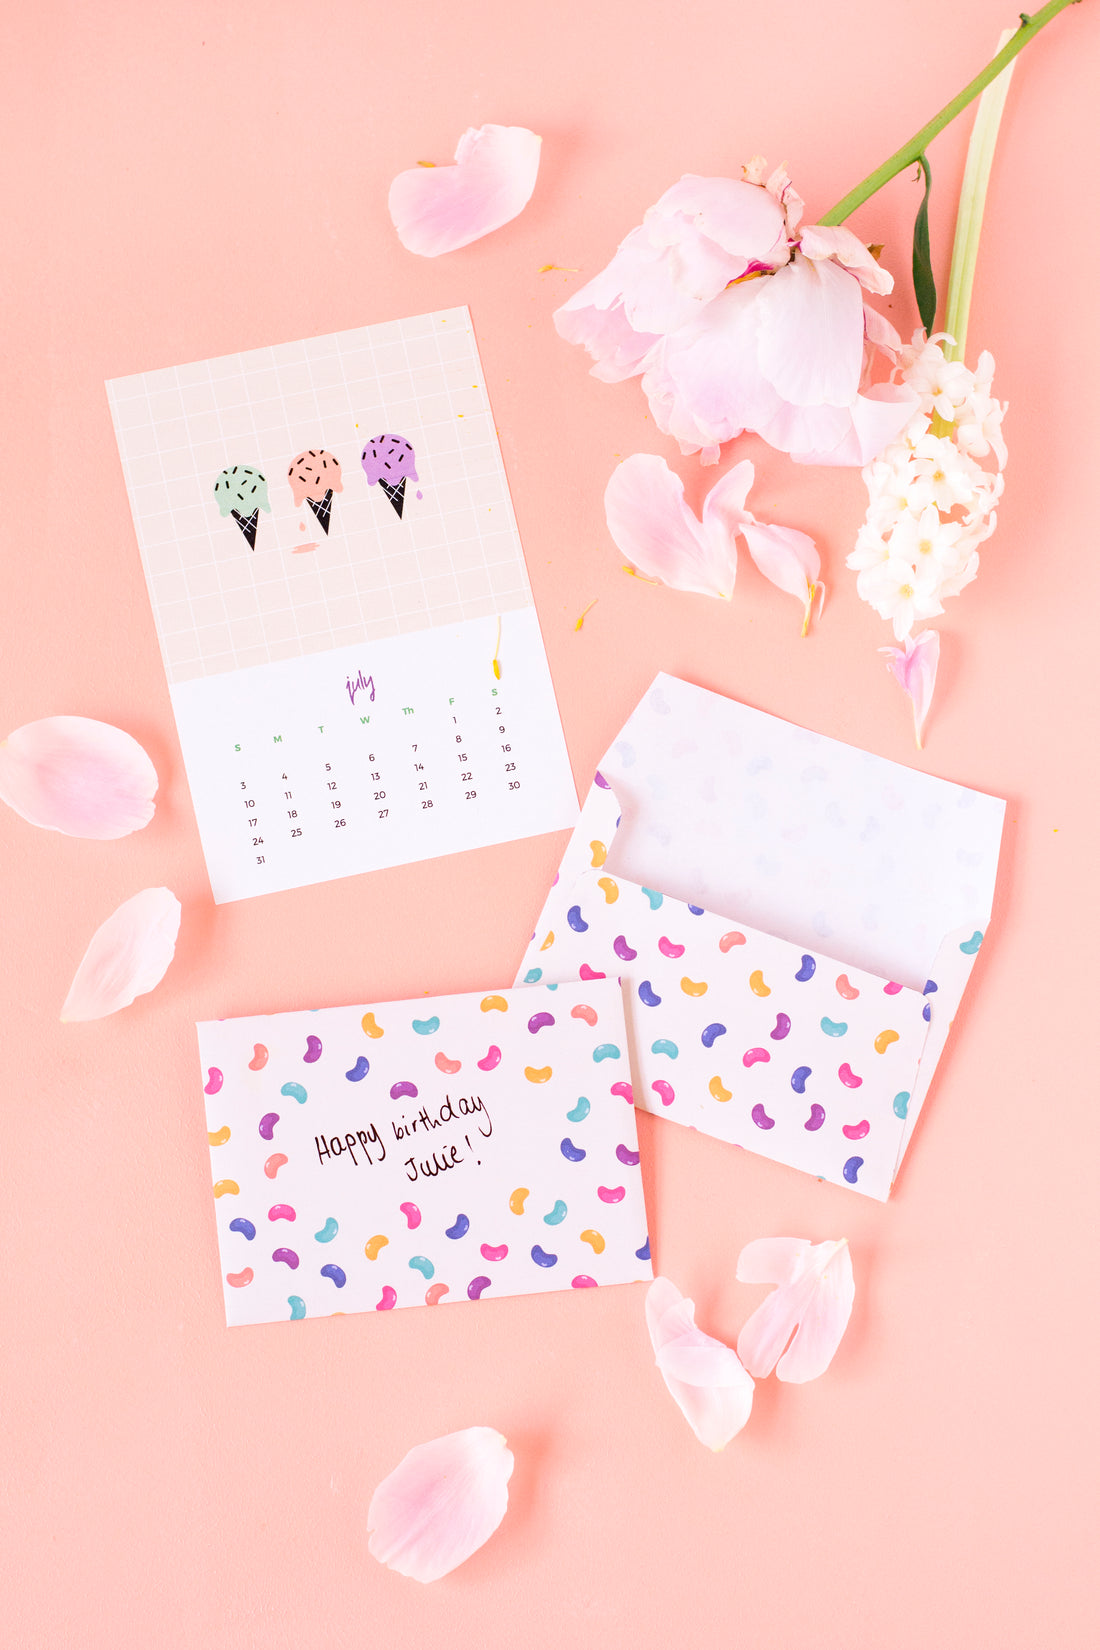 July's printable calendar and jellybean envelopes